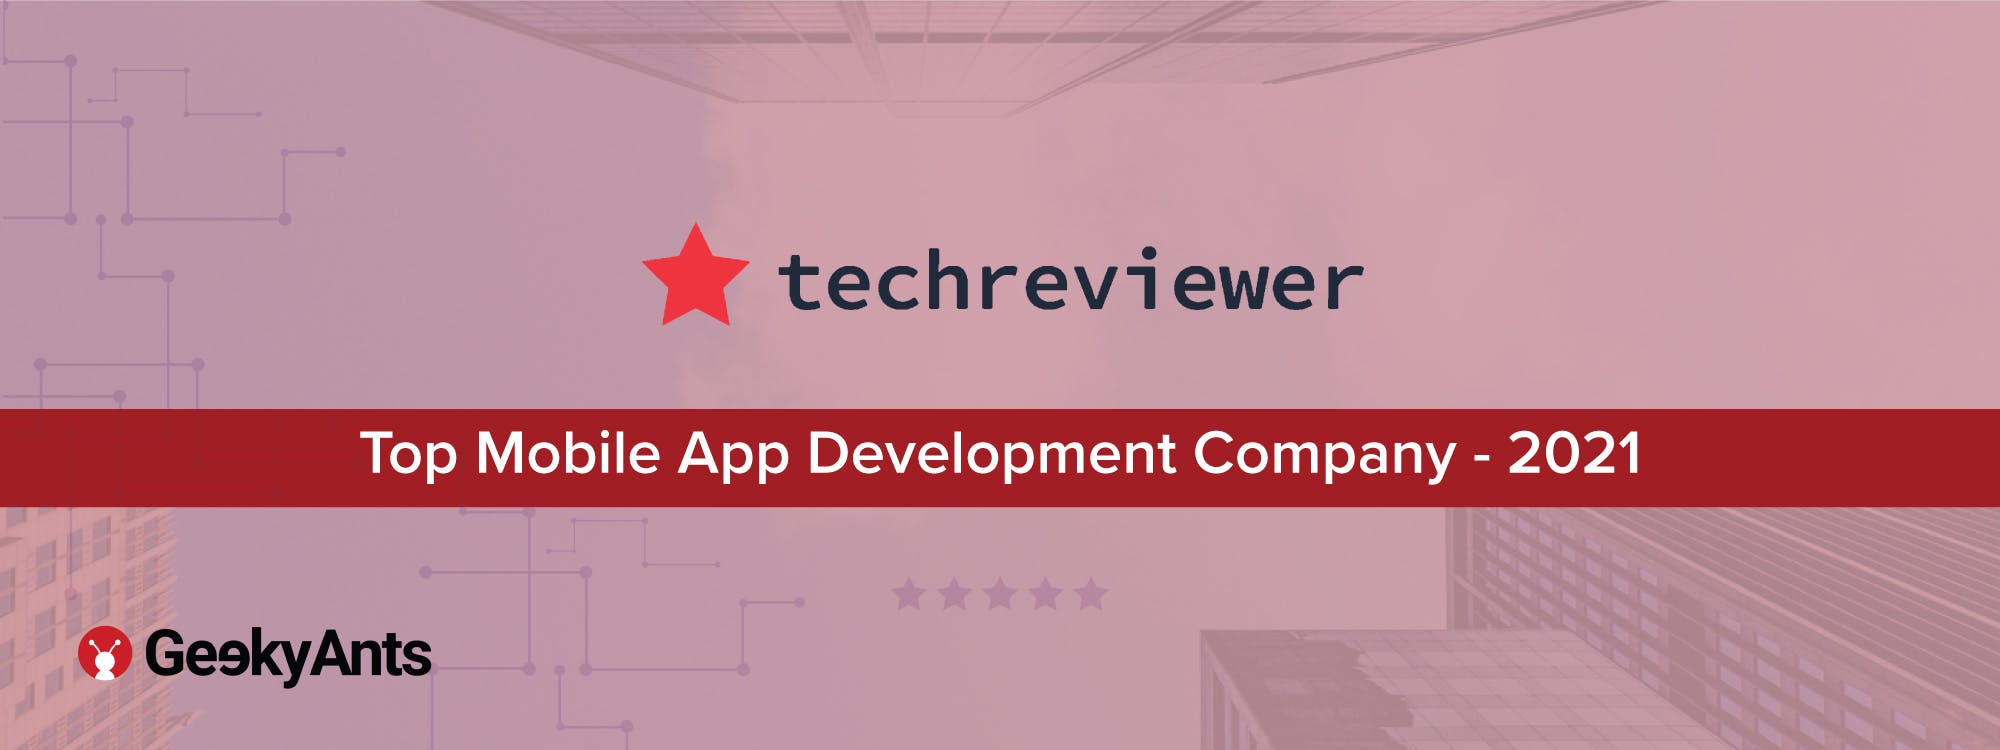 GeekyAnts: Top Mobile App Development Company in 2021